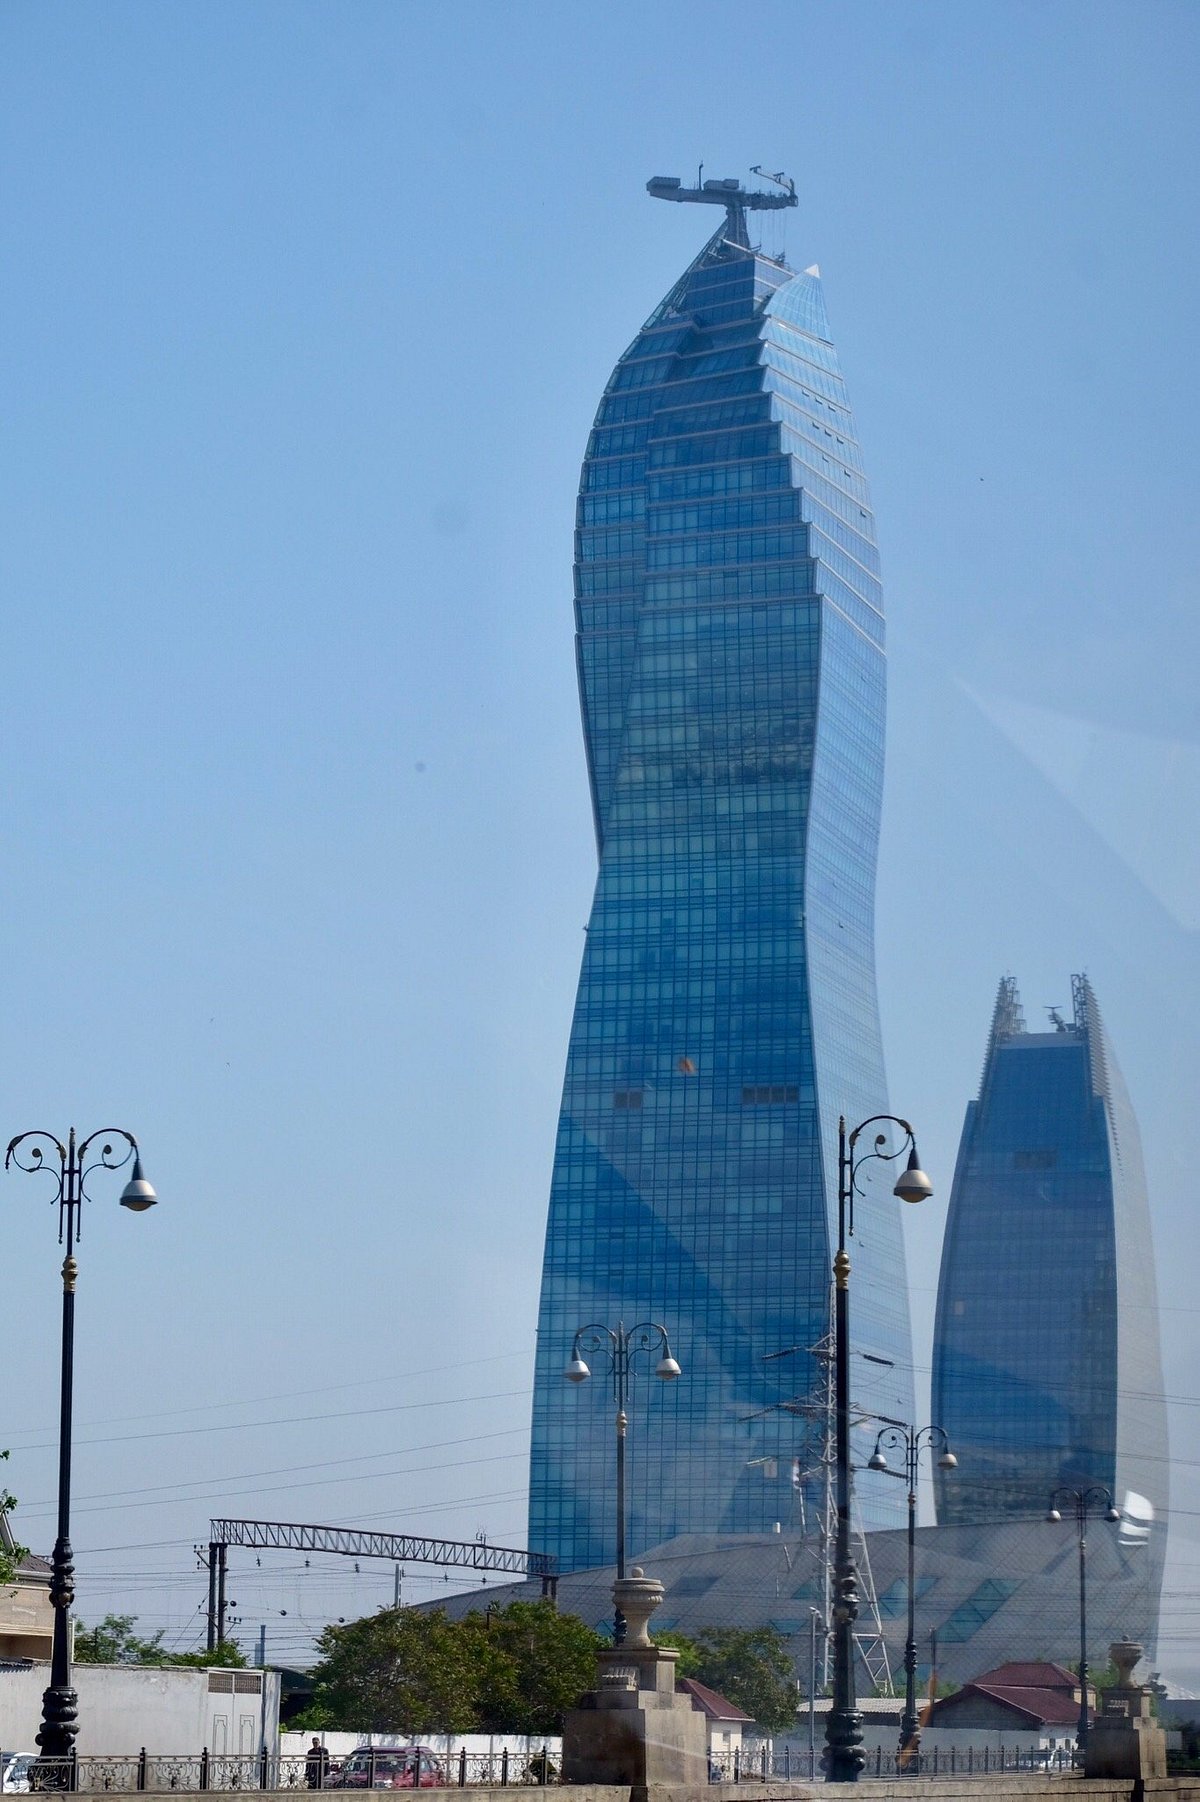 SOCAR Tower: The Tallest Building in Azerbaijan